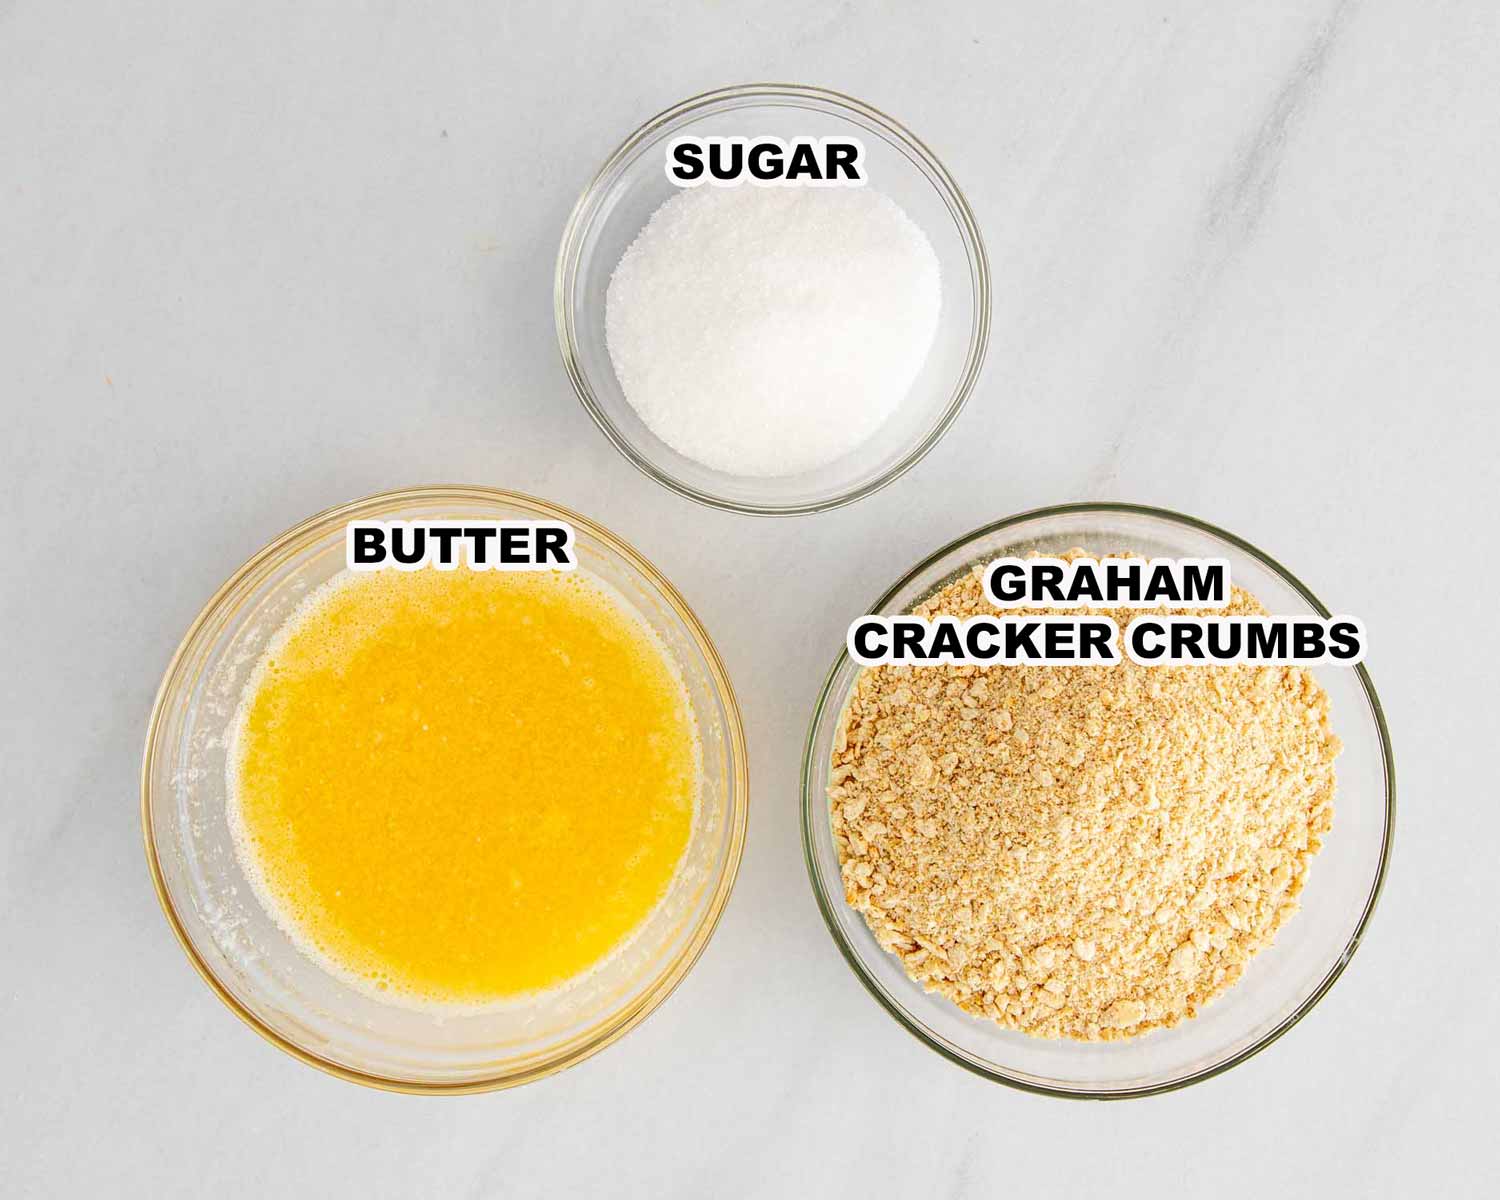 ingredients needed to make banana cream pie.